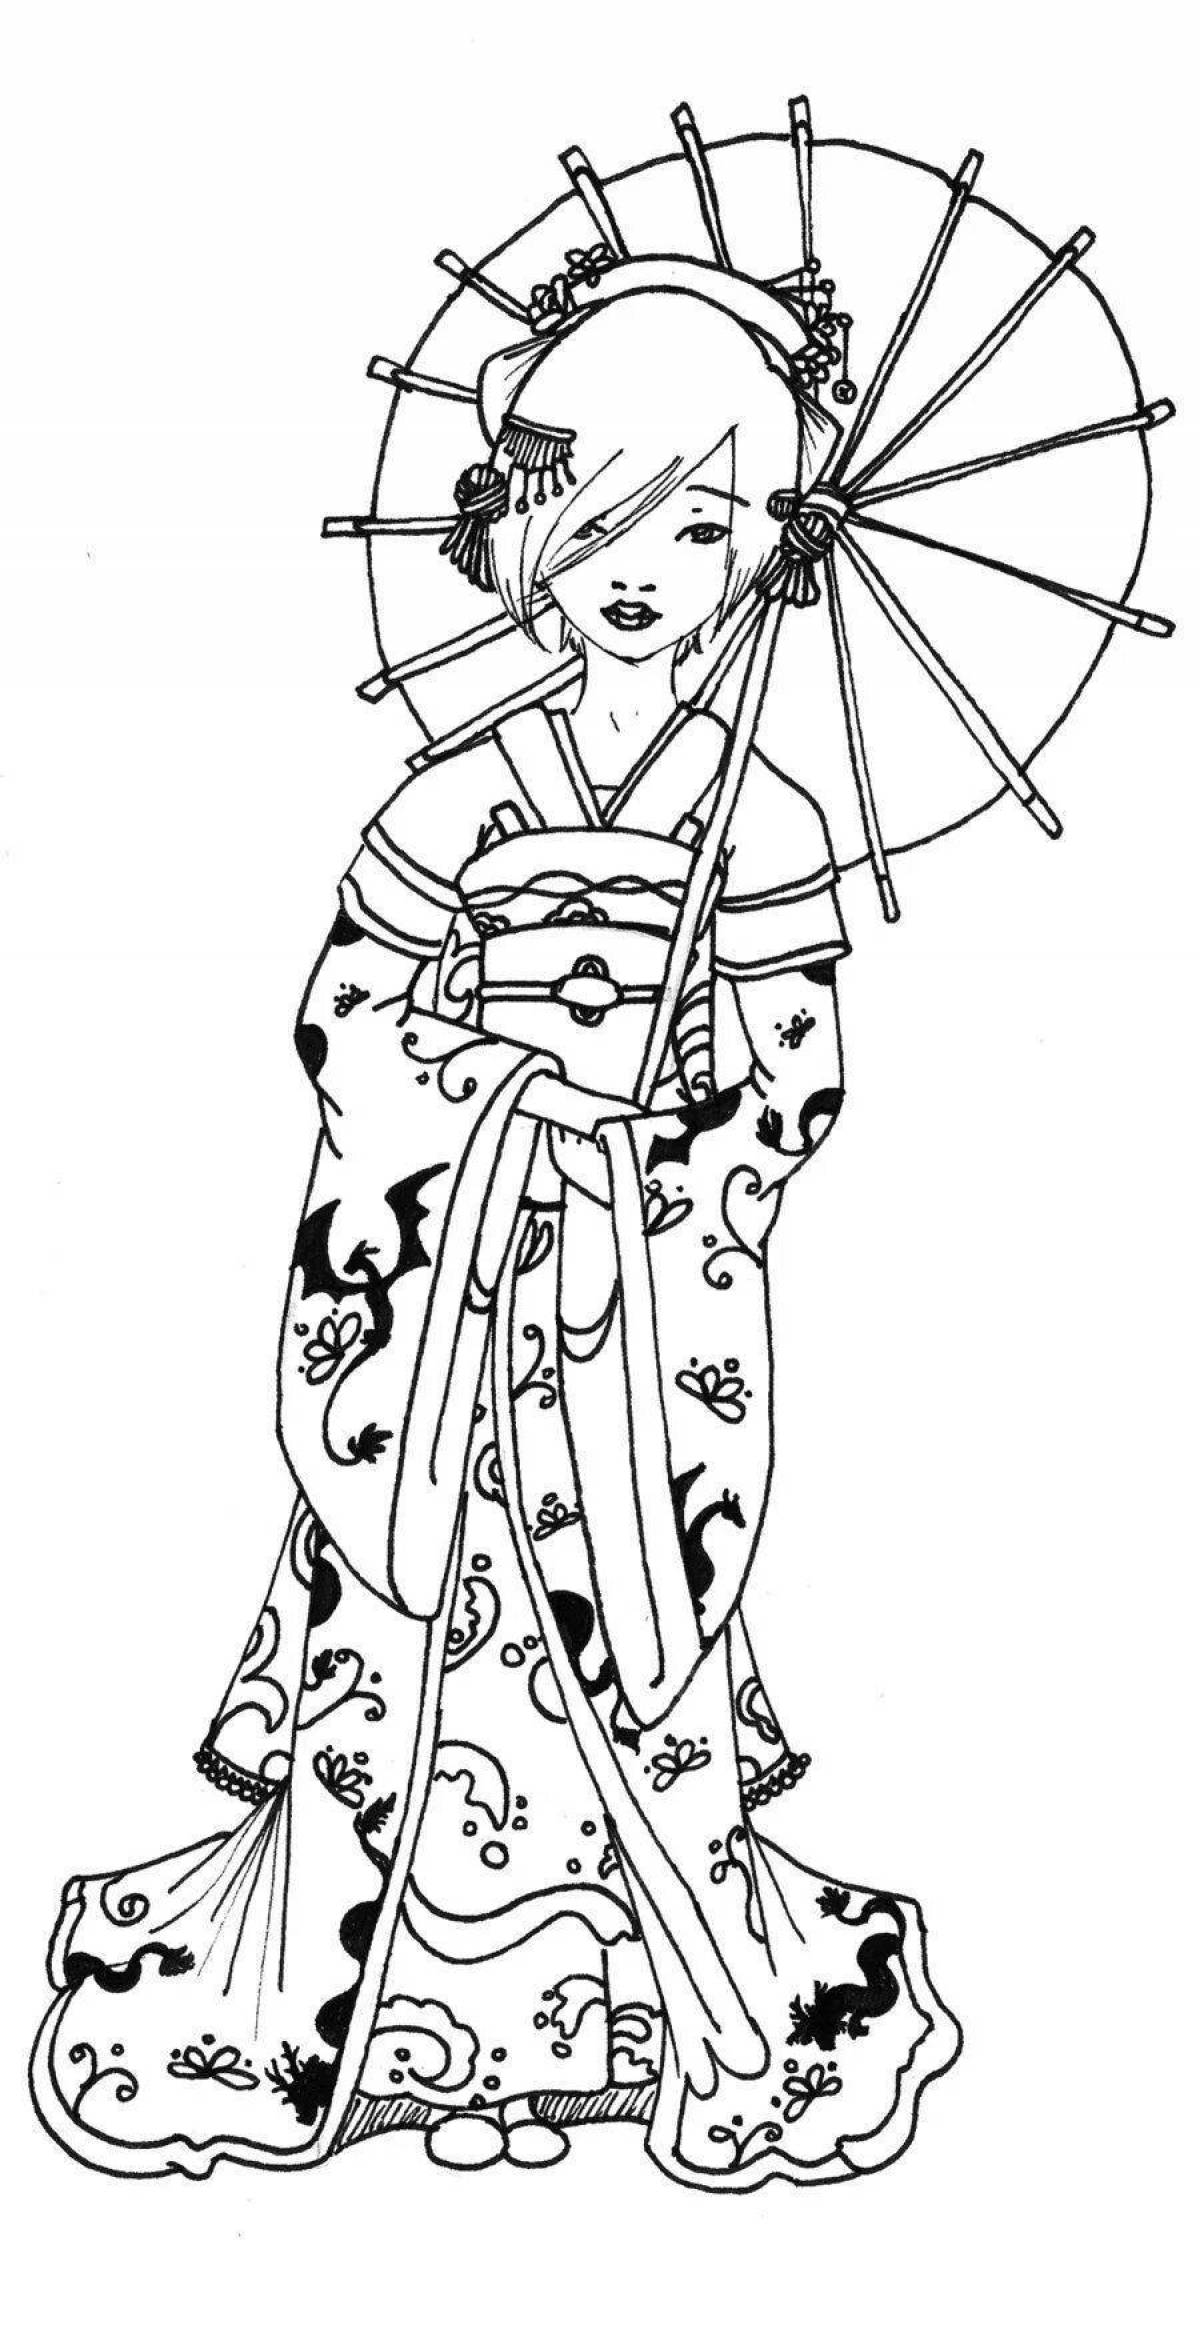 Exquisite coloring Japanese woman in kimono 4th grade